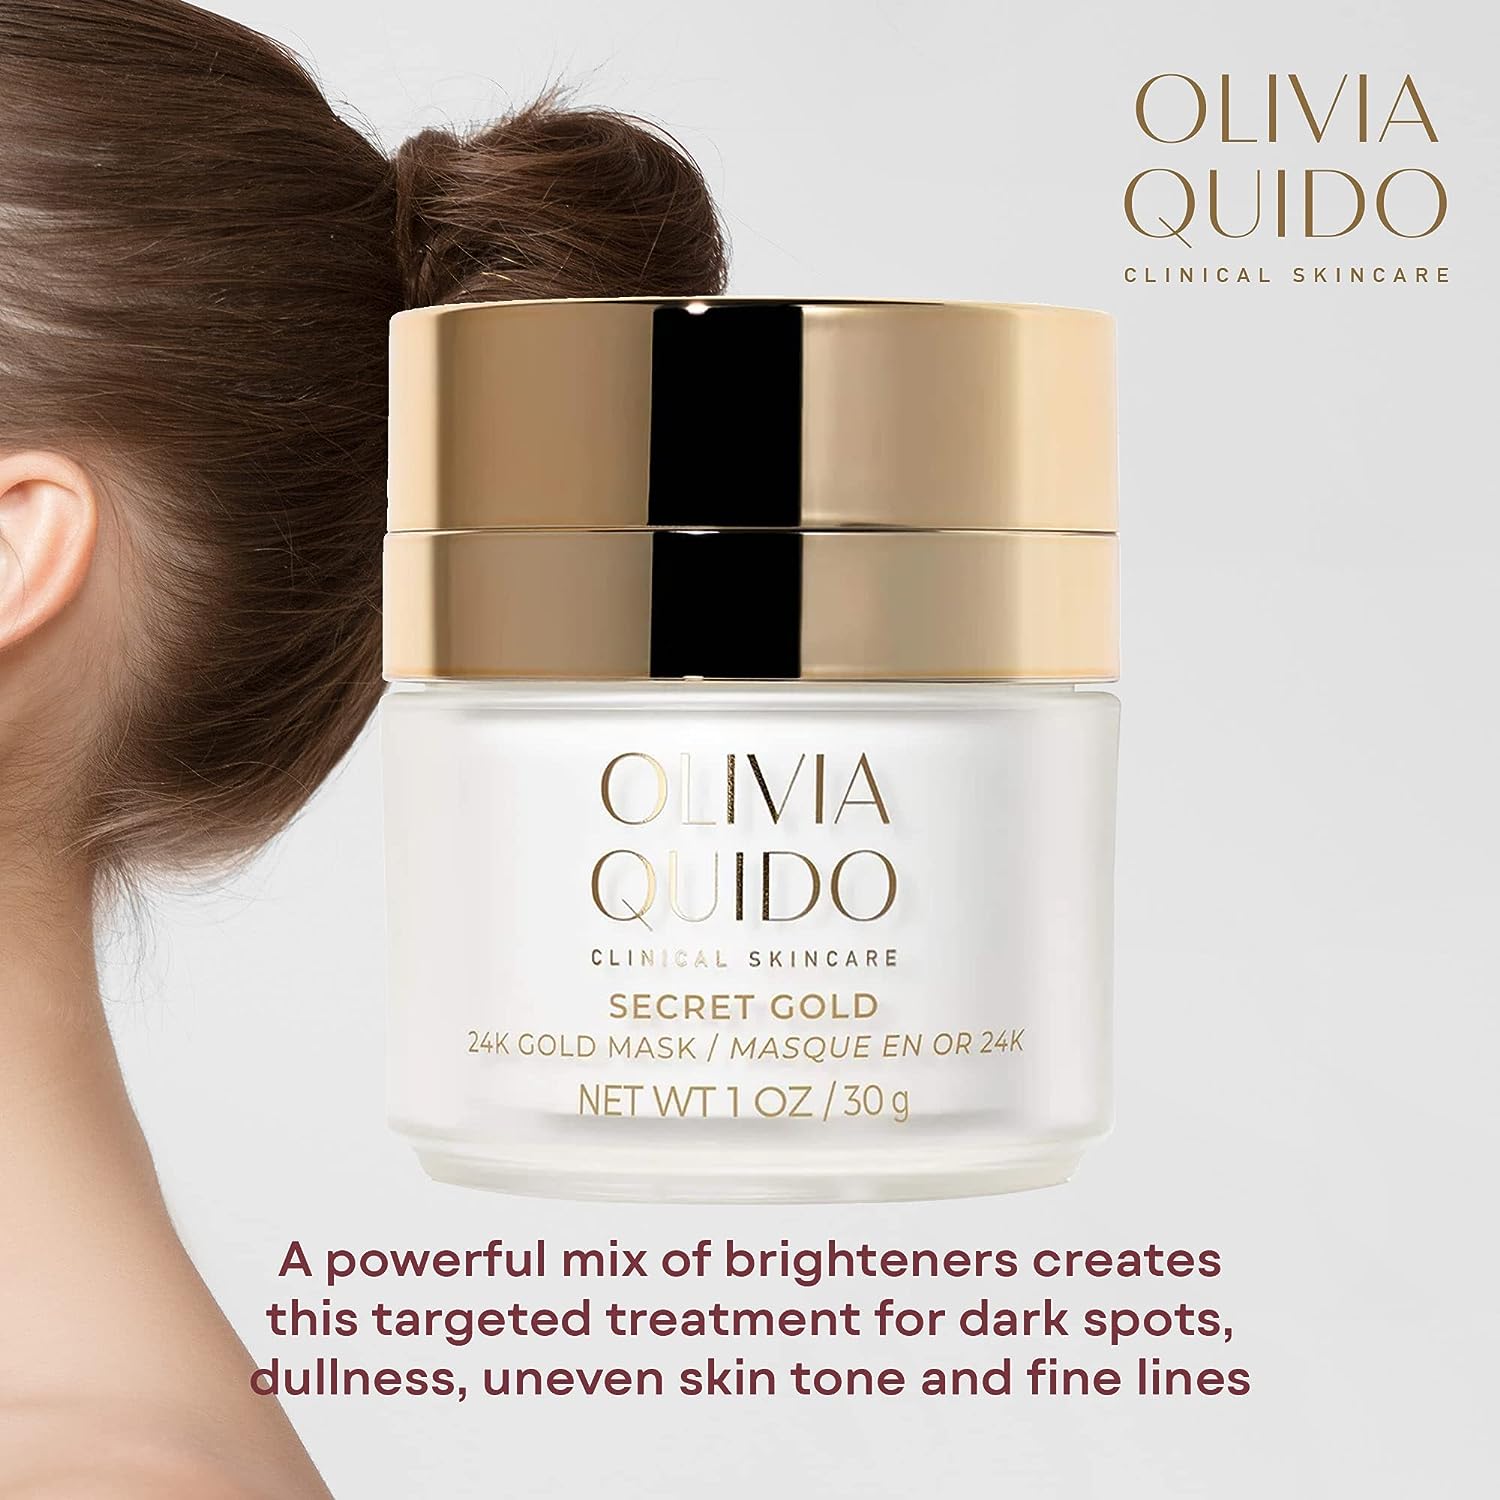 OLIVIA QUIDO Clinical Skincare Secret Radiance Night Cream (30g